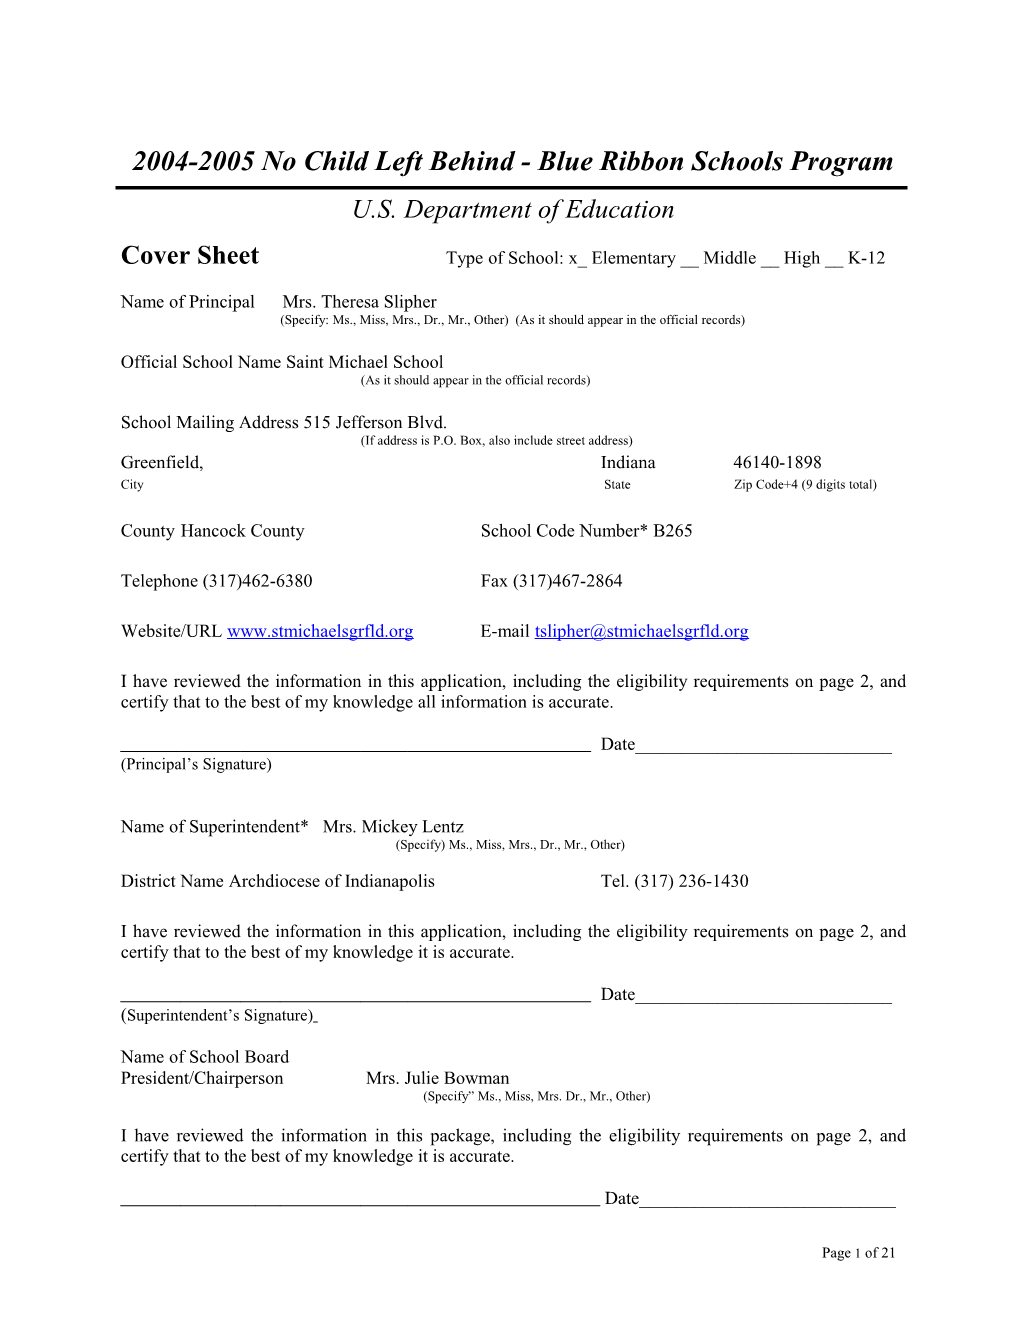 Saint Michael School Application: 2004-2005, No Child Left Behind - Blue Ribbon Schools